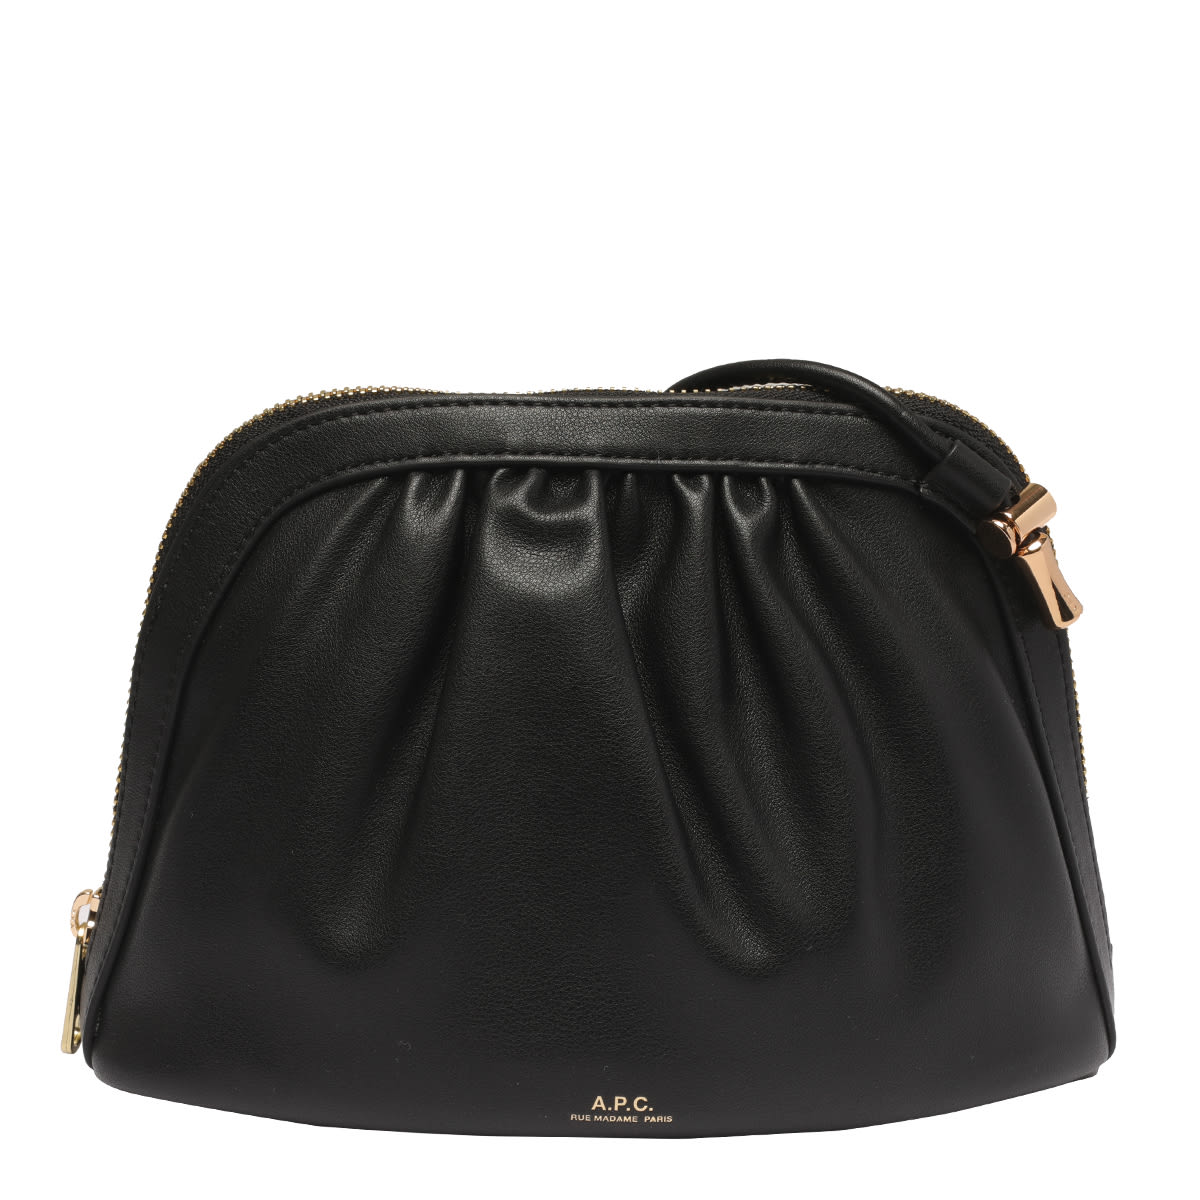 Apc Black Small Bourse Ninon Bag